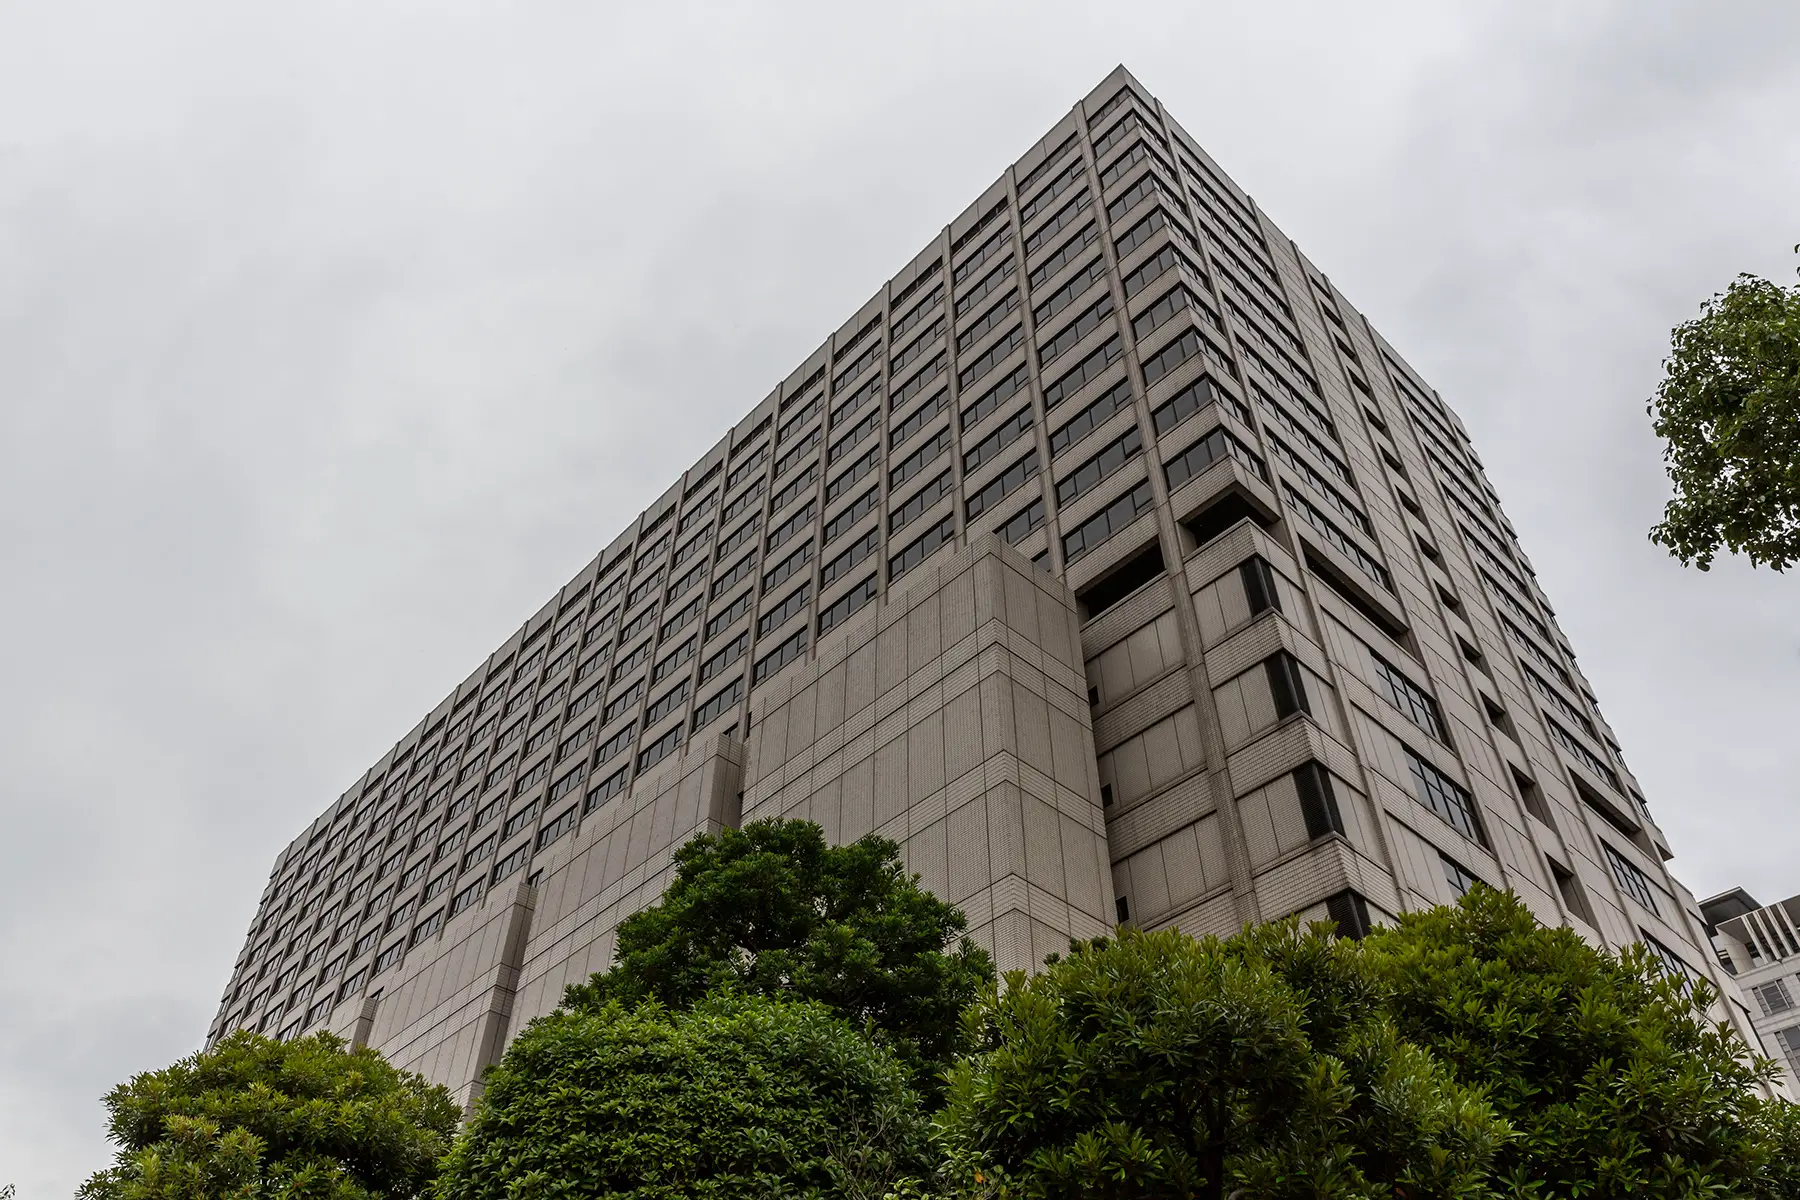 Tokyo District Court: a huge grey concrete building, seen from below.